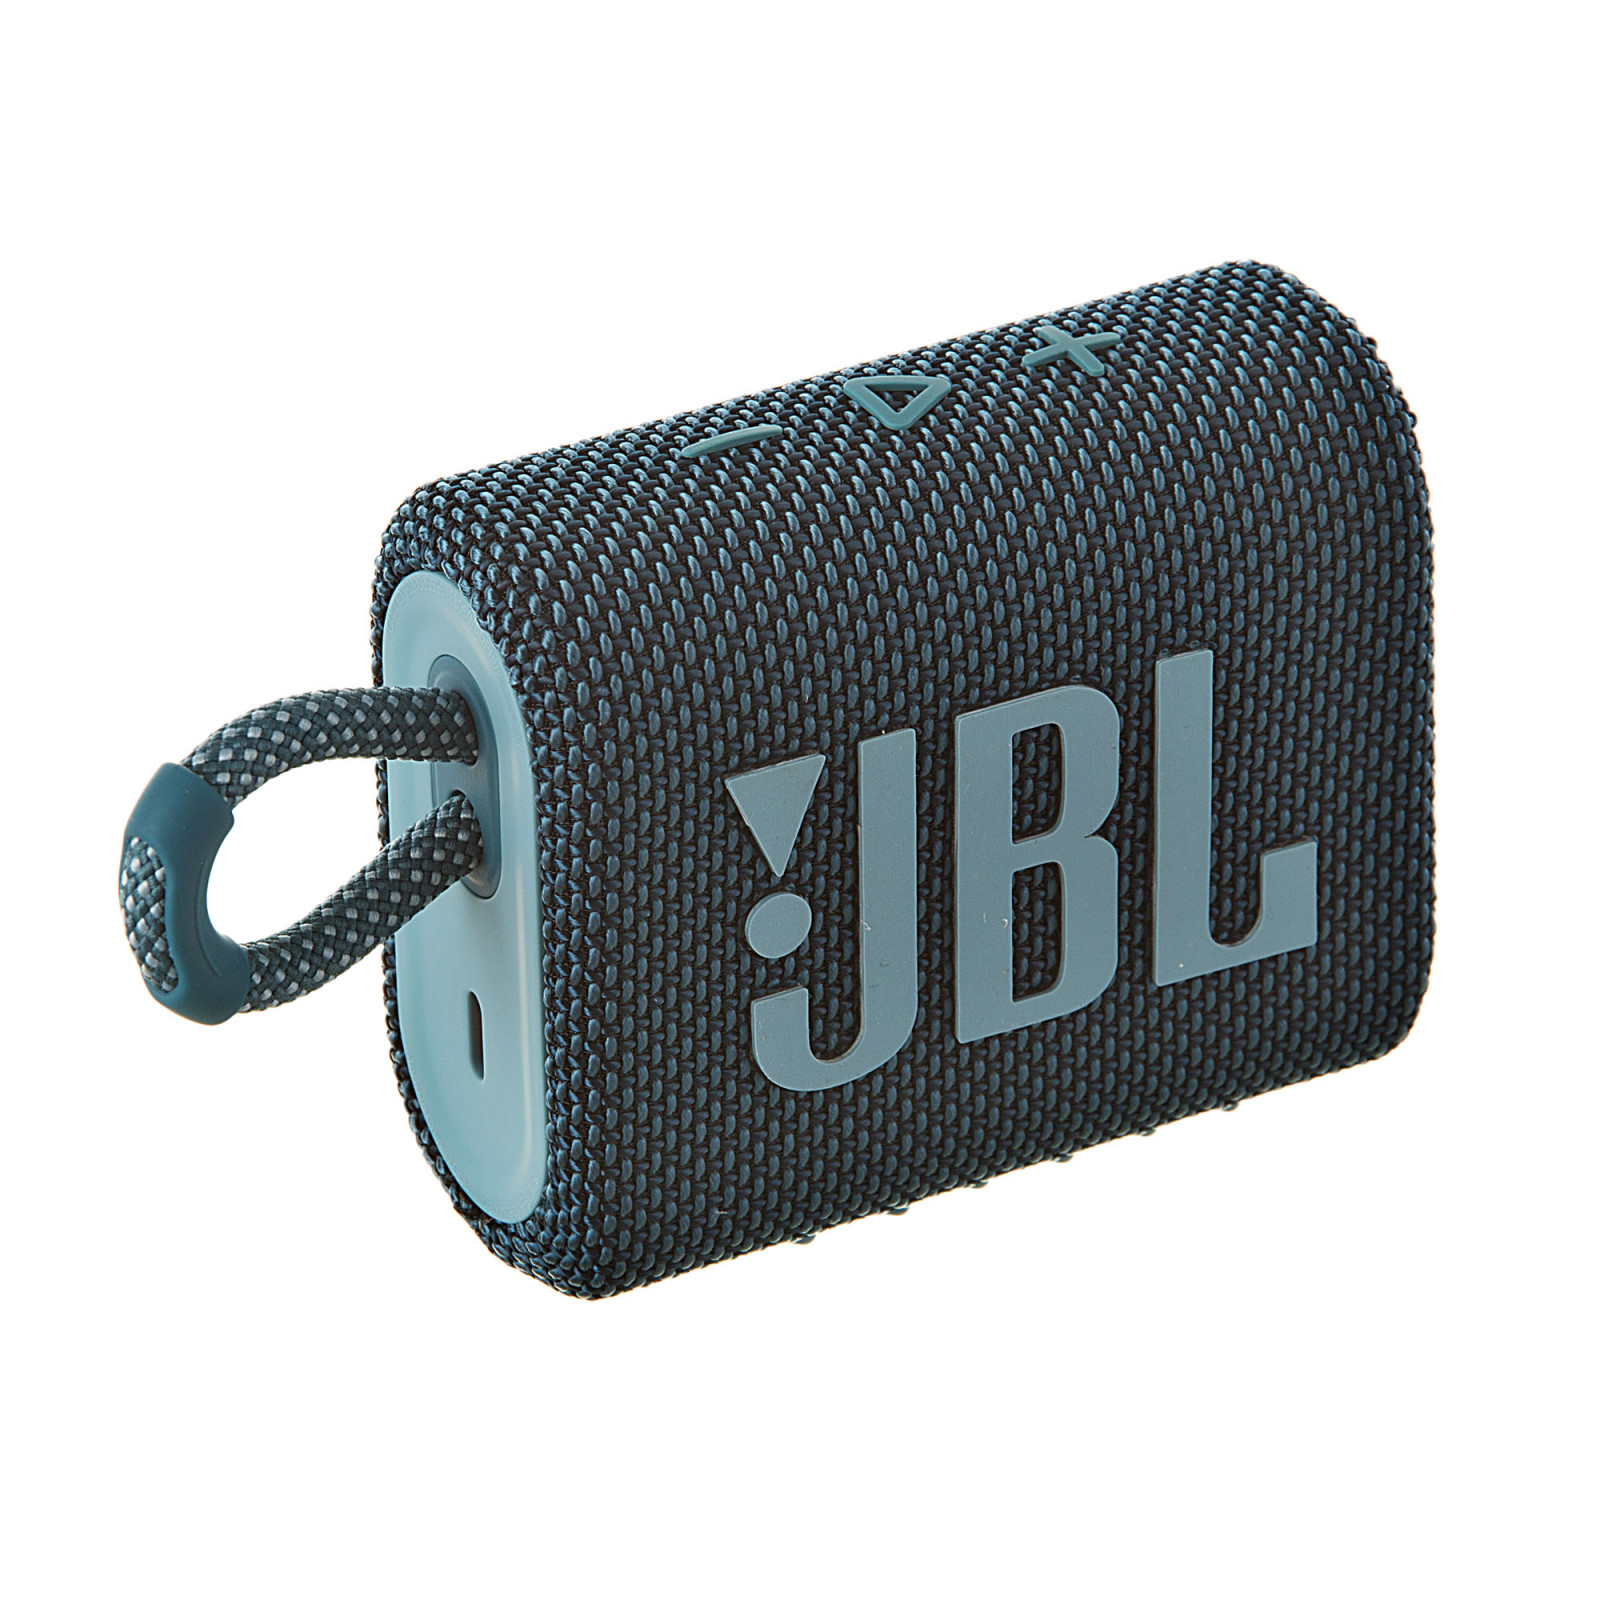 JBL GO 2 - Intervalo Shop